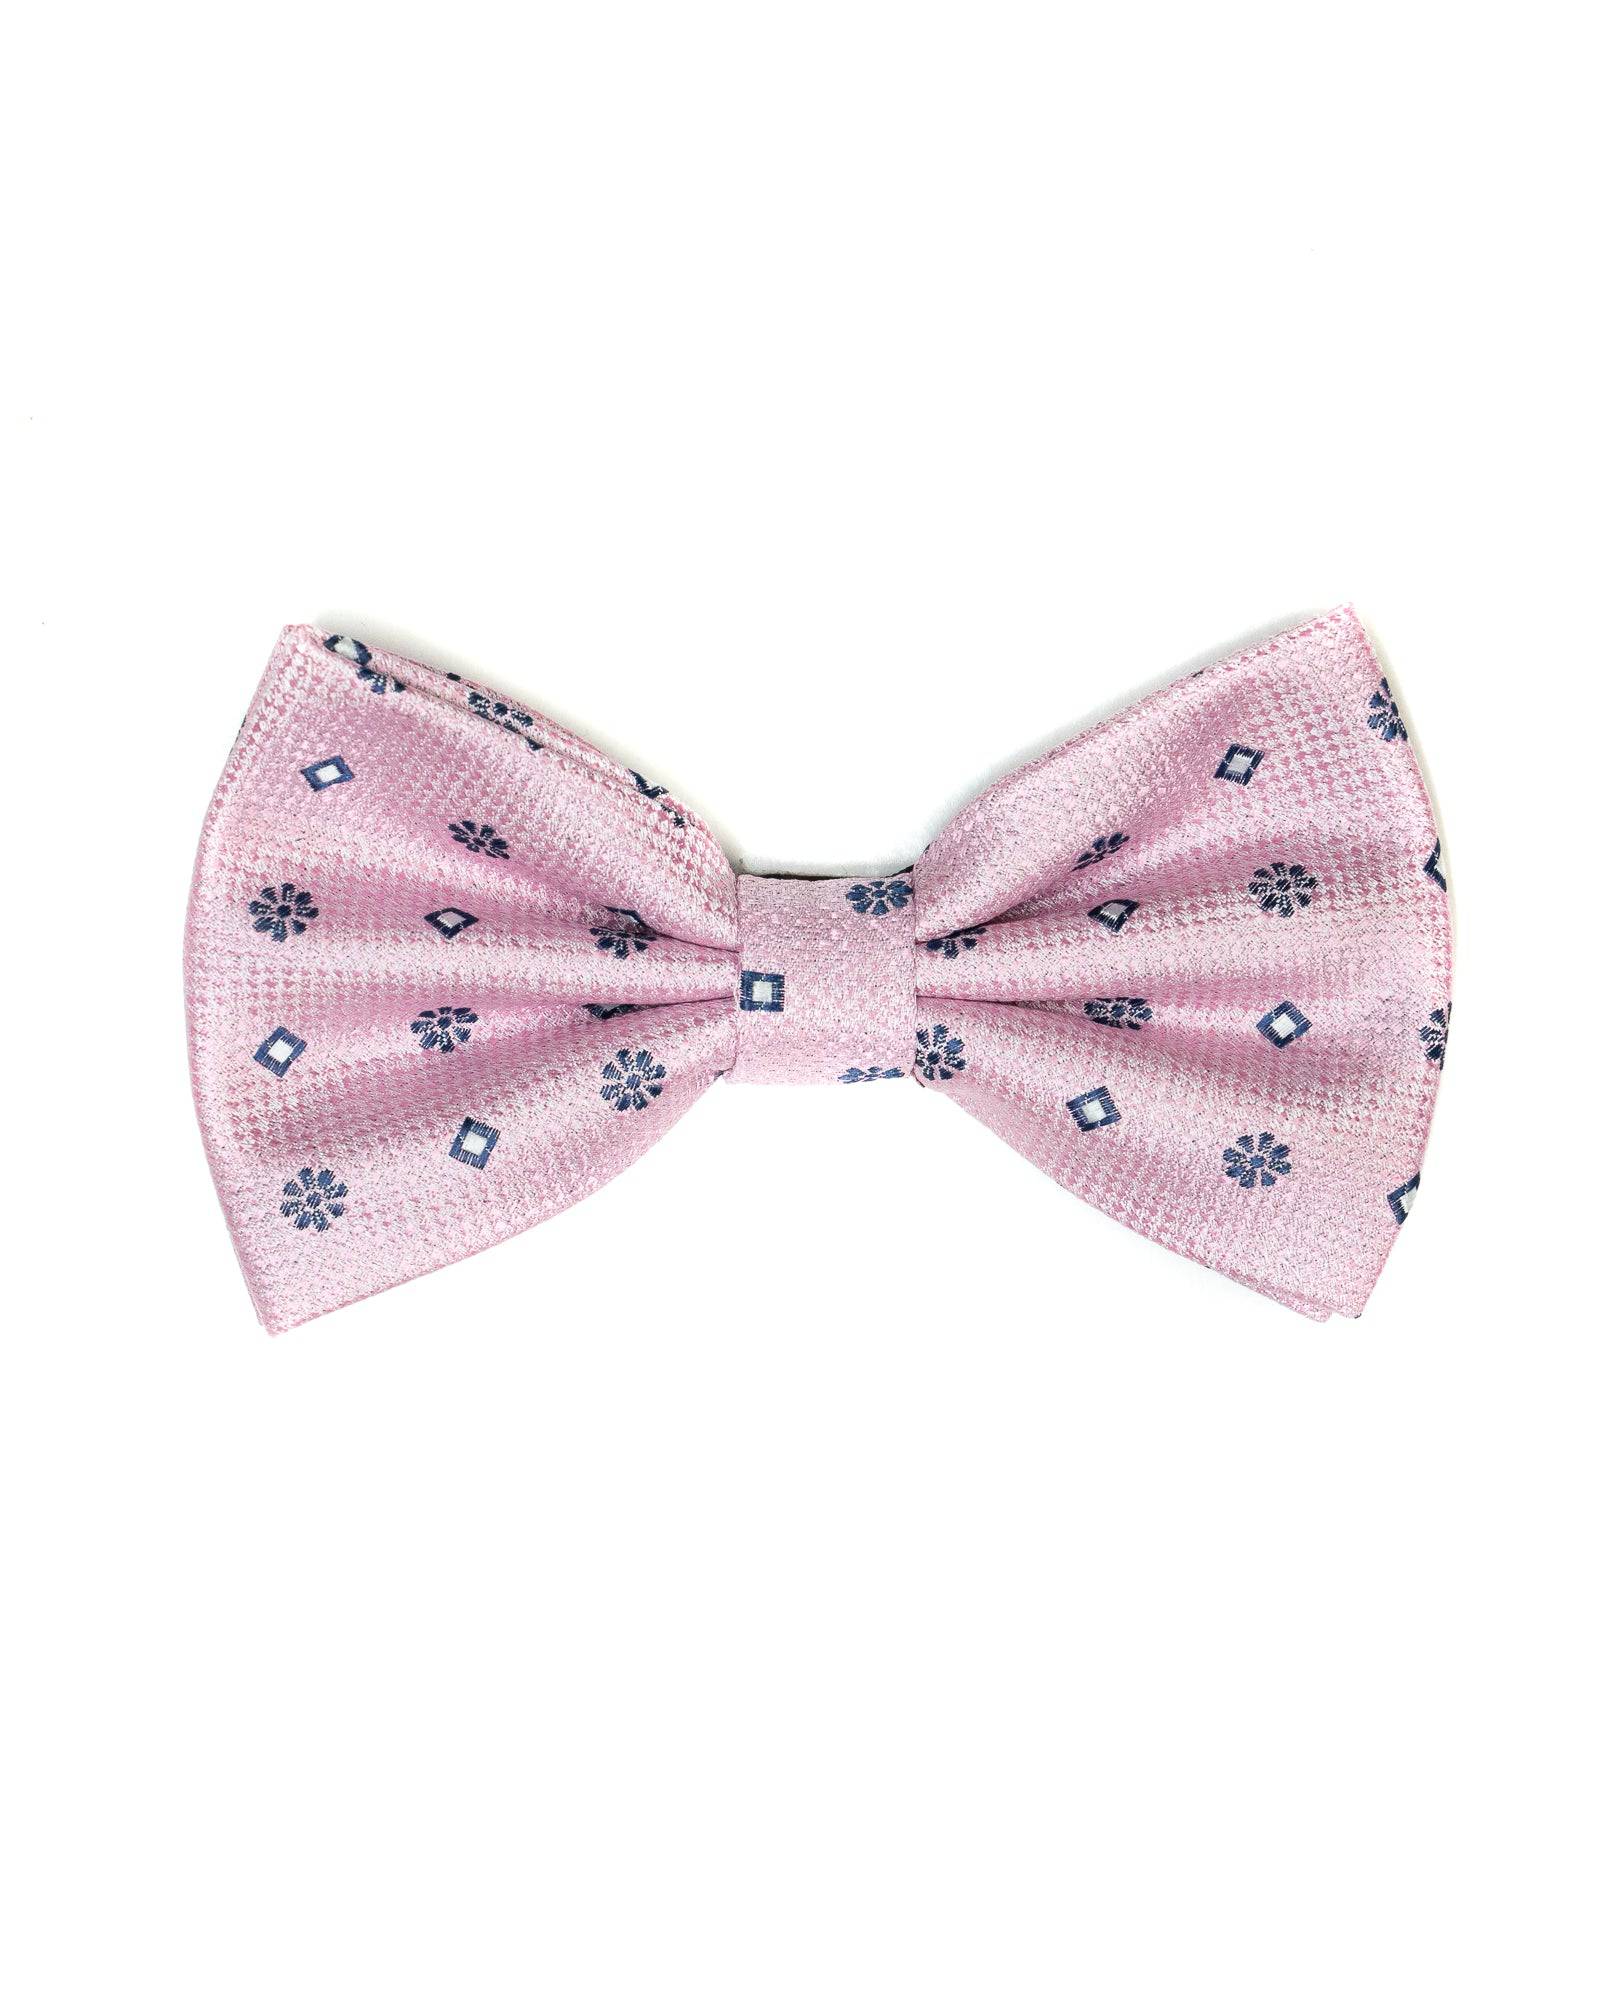 Bow Tie In Foulard Pattern Pink & Grey - Rainwater's Men's Clothing and Tuxedo Rental